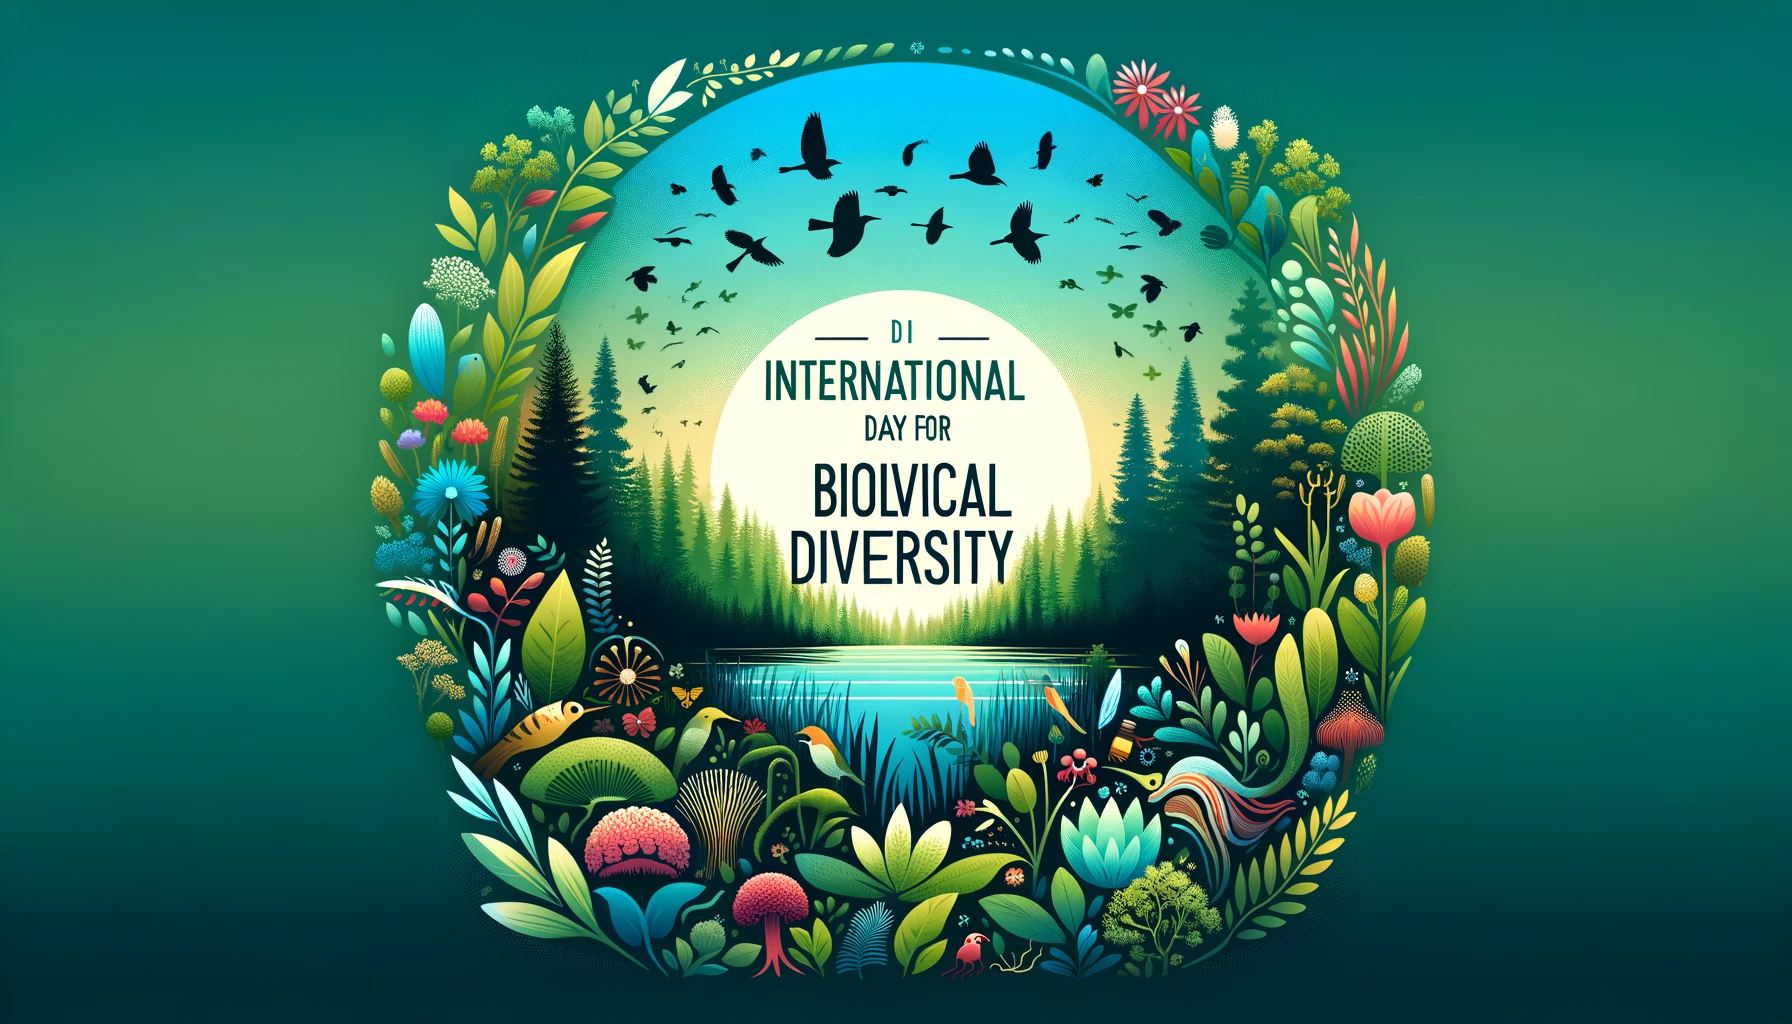  International Day for Biological Diversity 